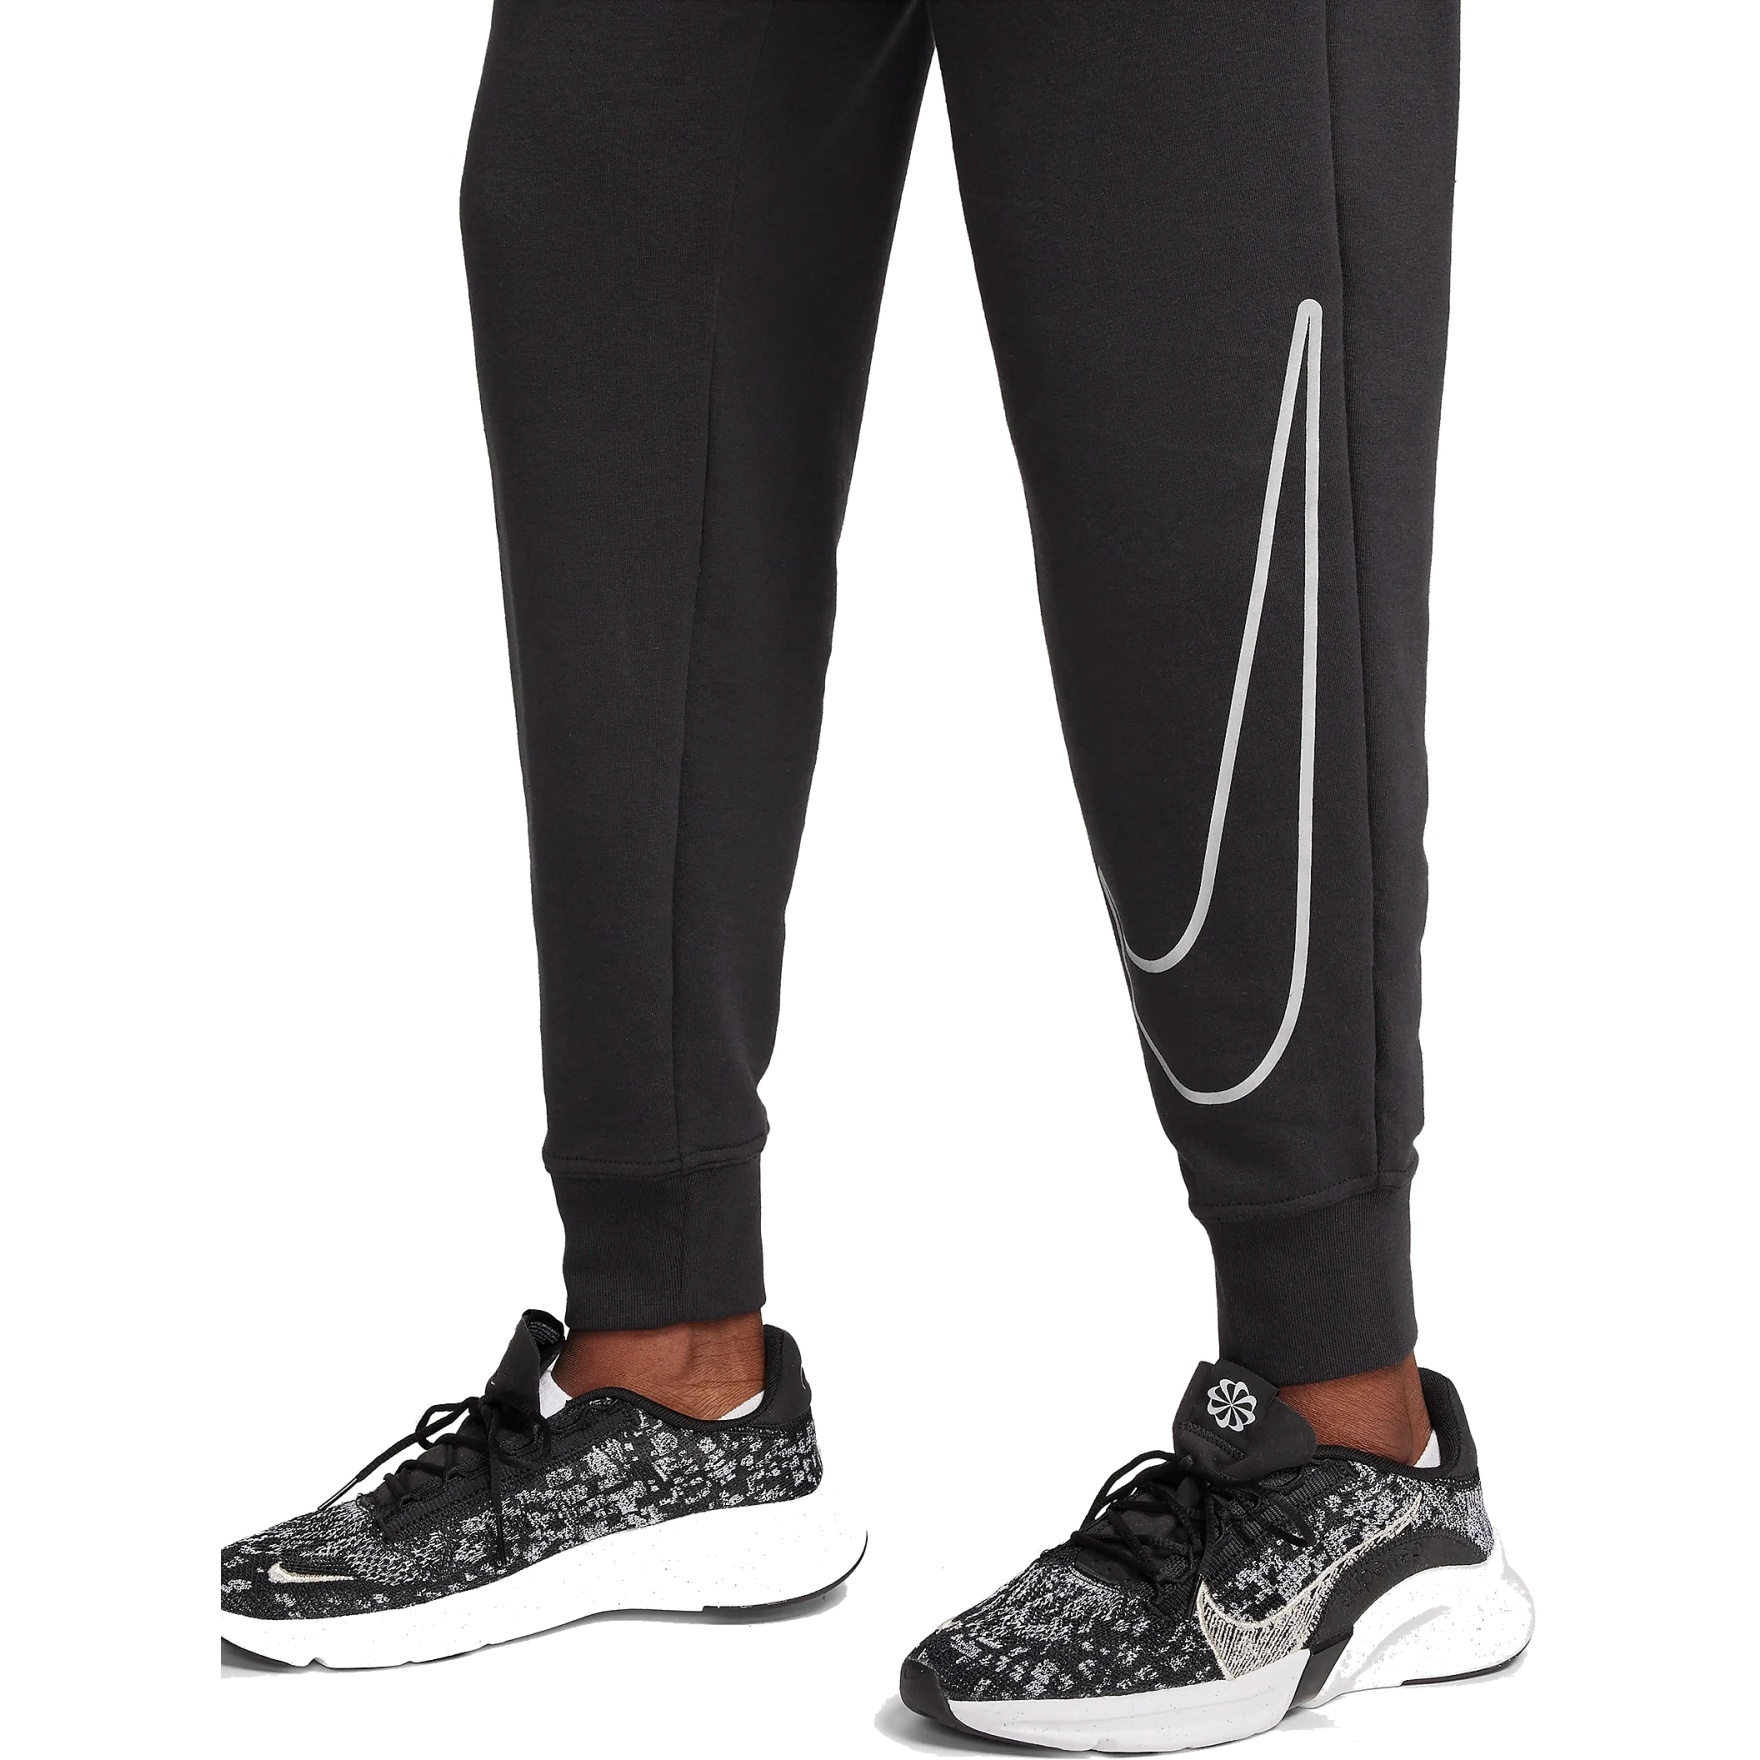 Nike Women's Yoga 7/8 Fleece Jogger Pants, Training